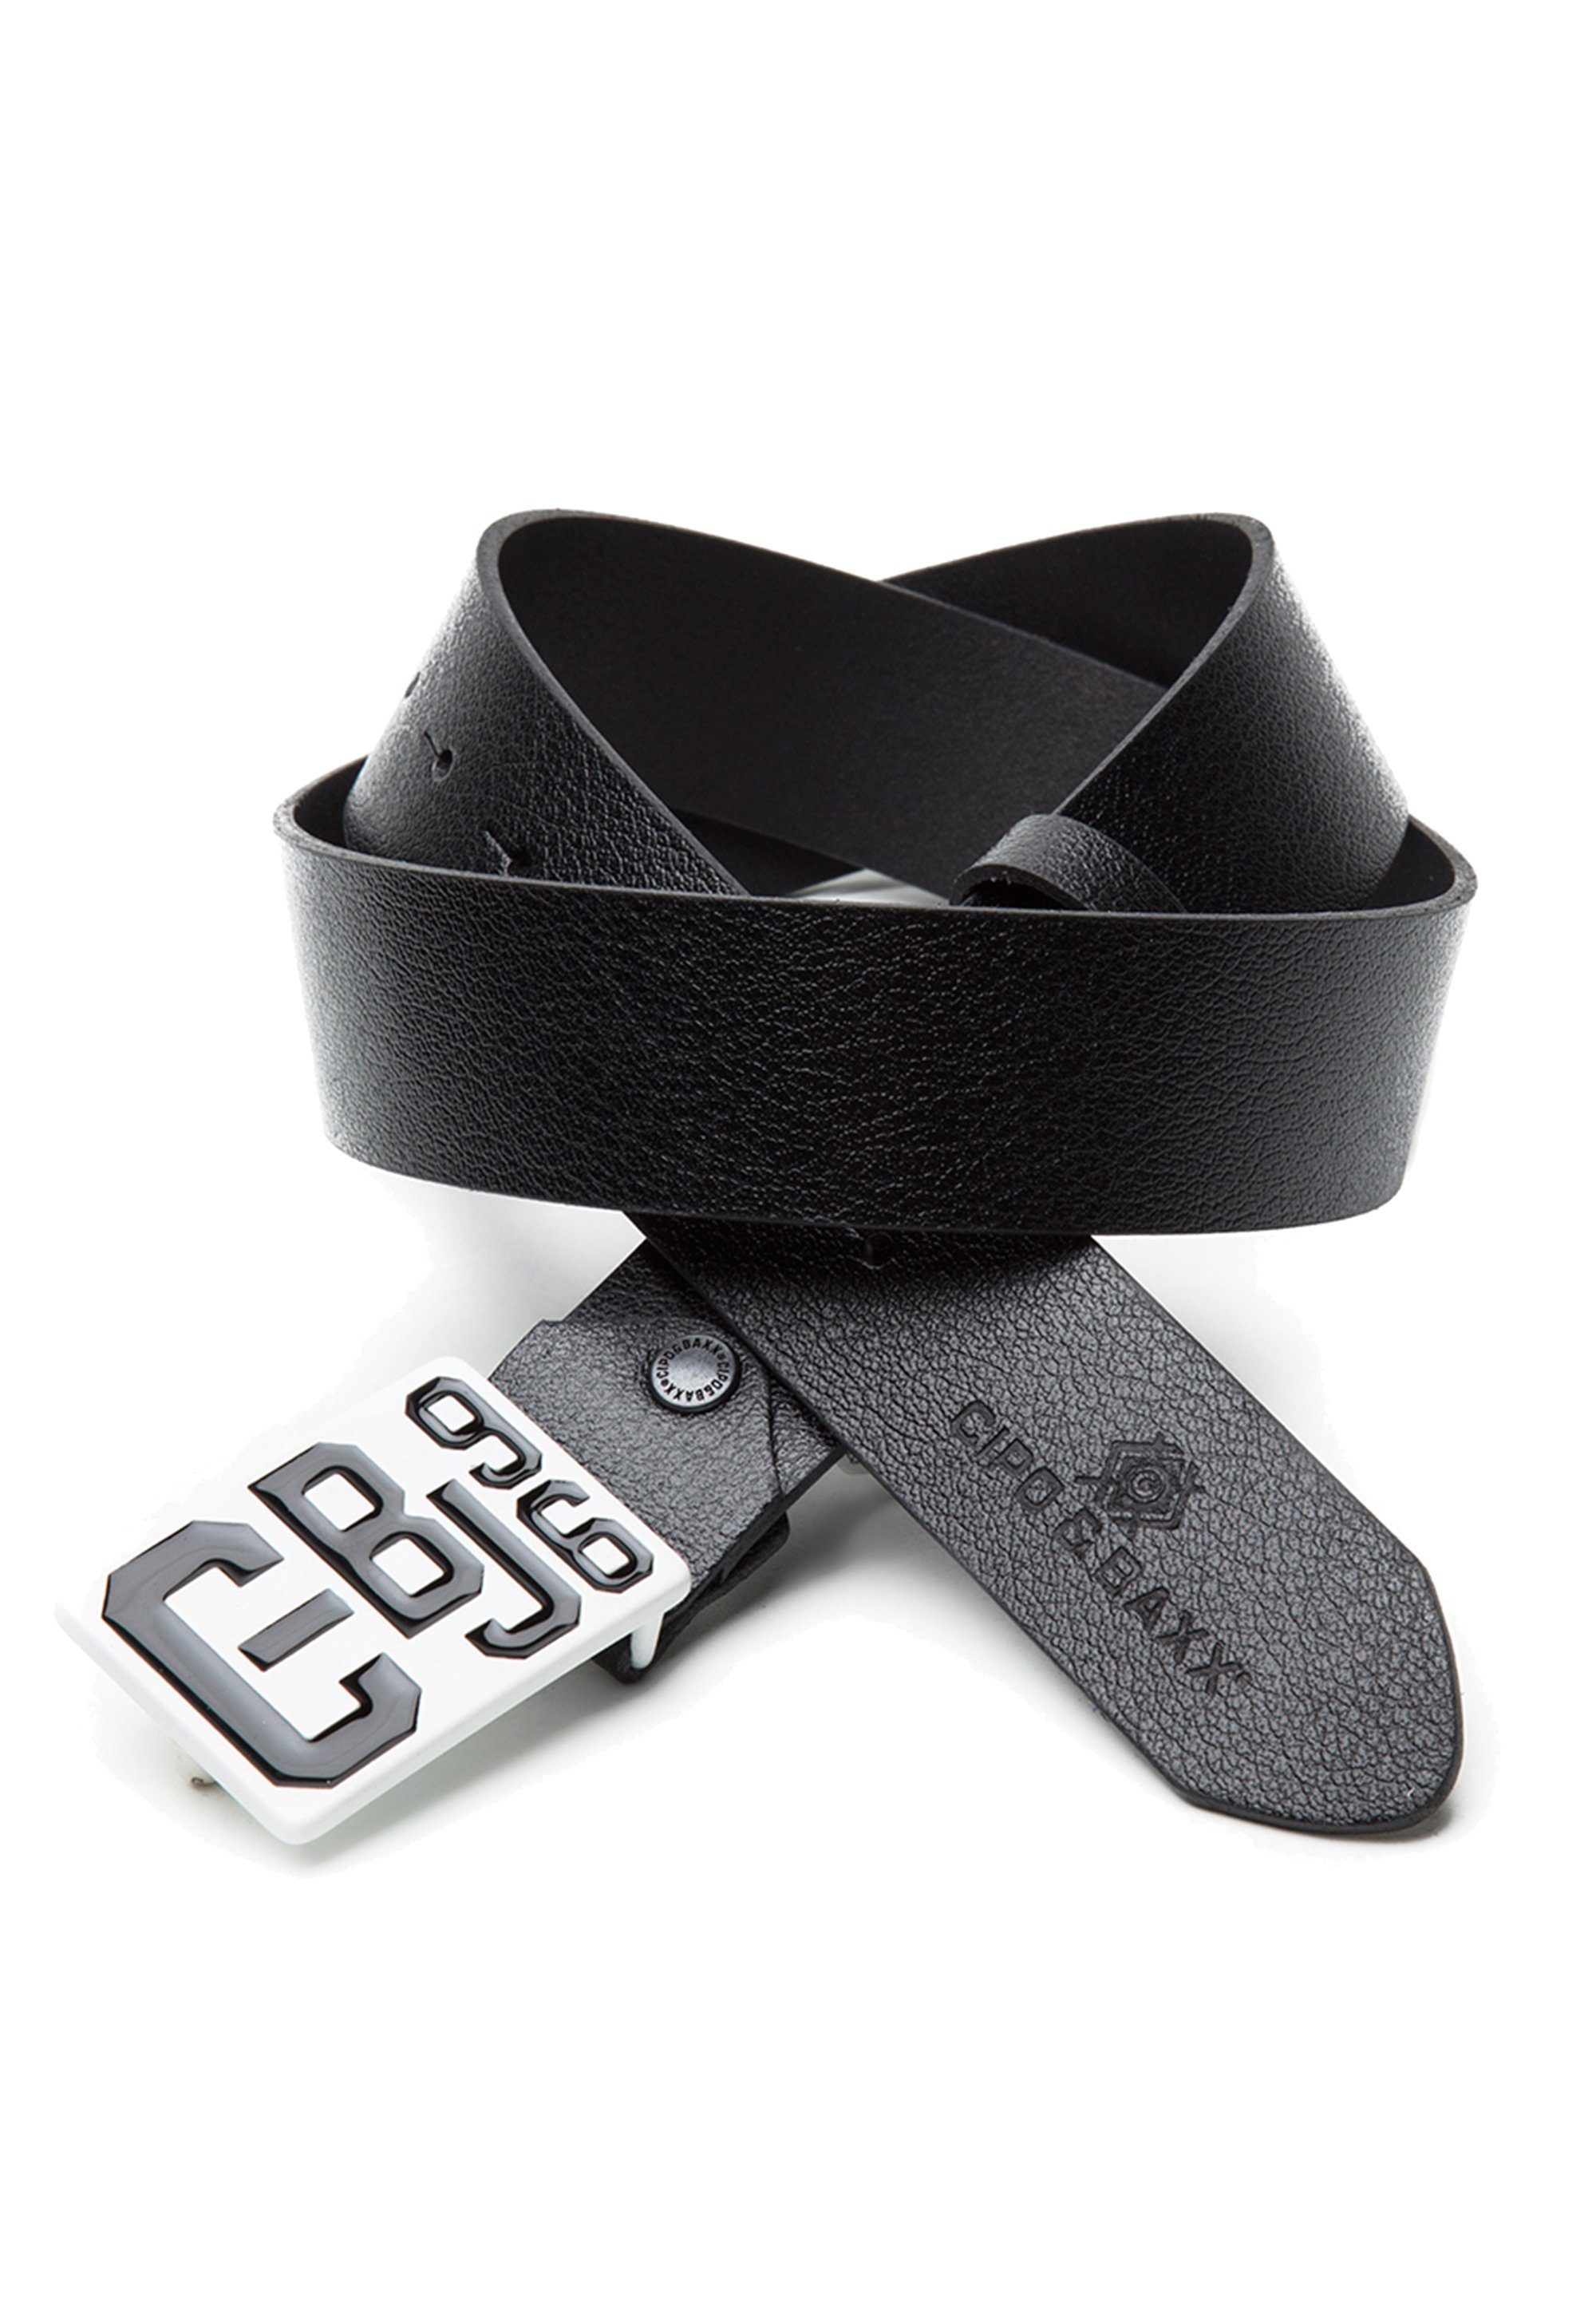 Cipo & Baxx in tollem schwarz Ledergürtel Design